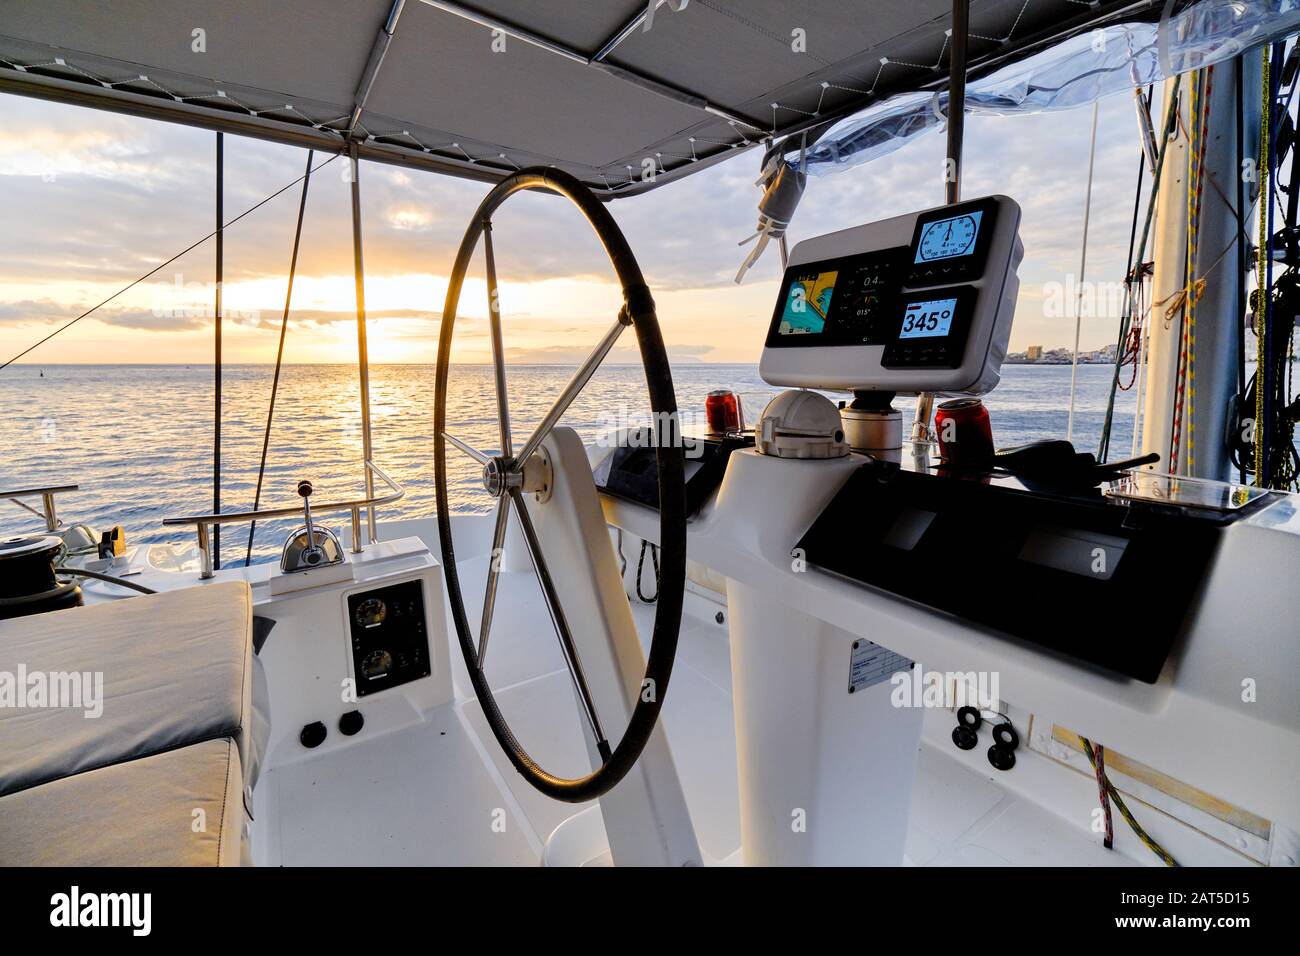 Idyllic scenery glowing sun down Ocean calm water view from catamaran flybridge open deck, modern luxury yacht equipped with navigation dashboard devi Stock Photo